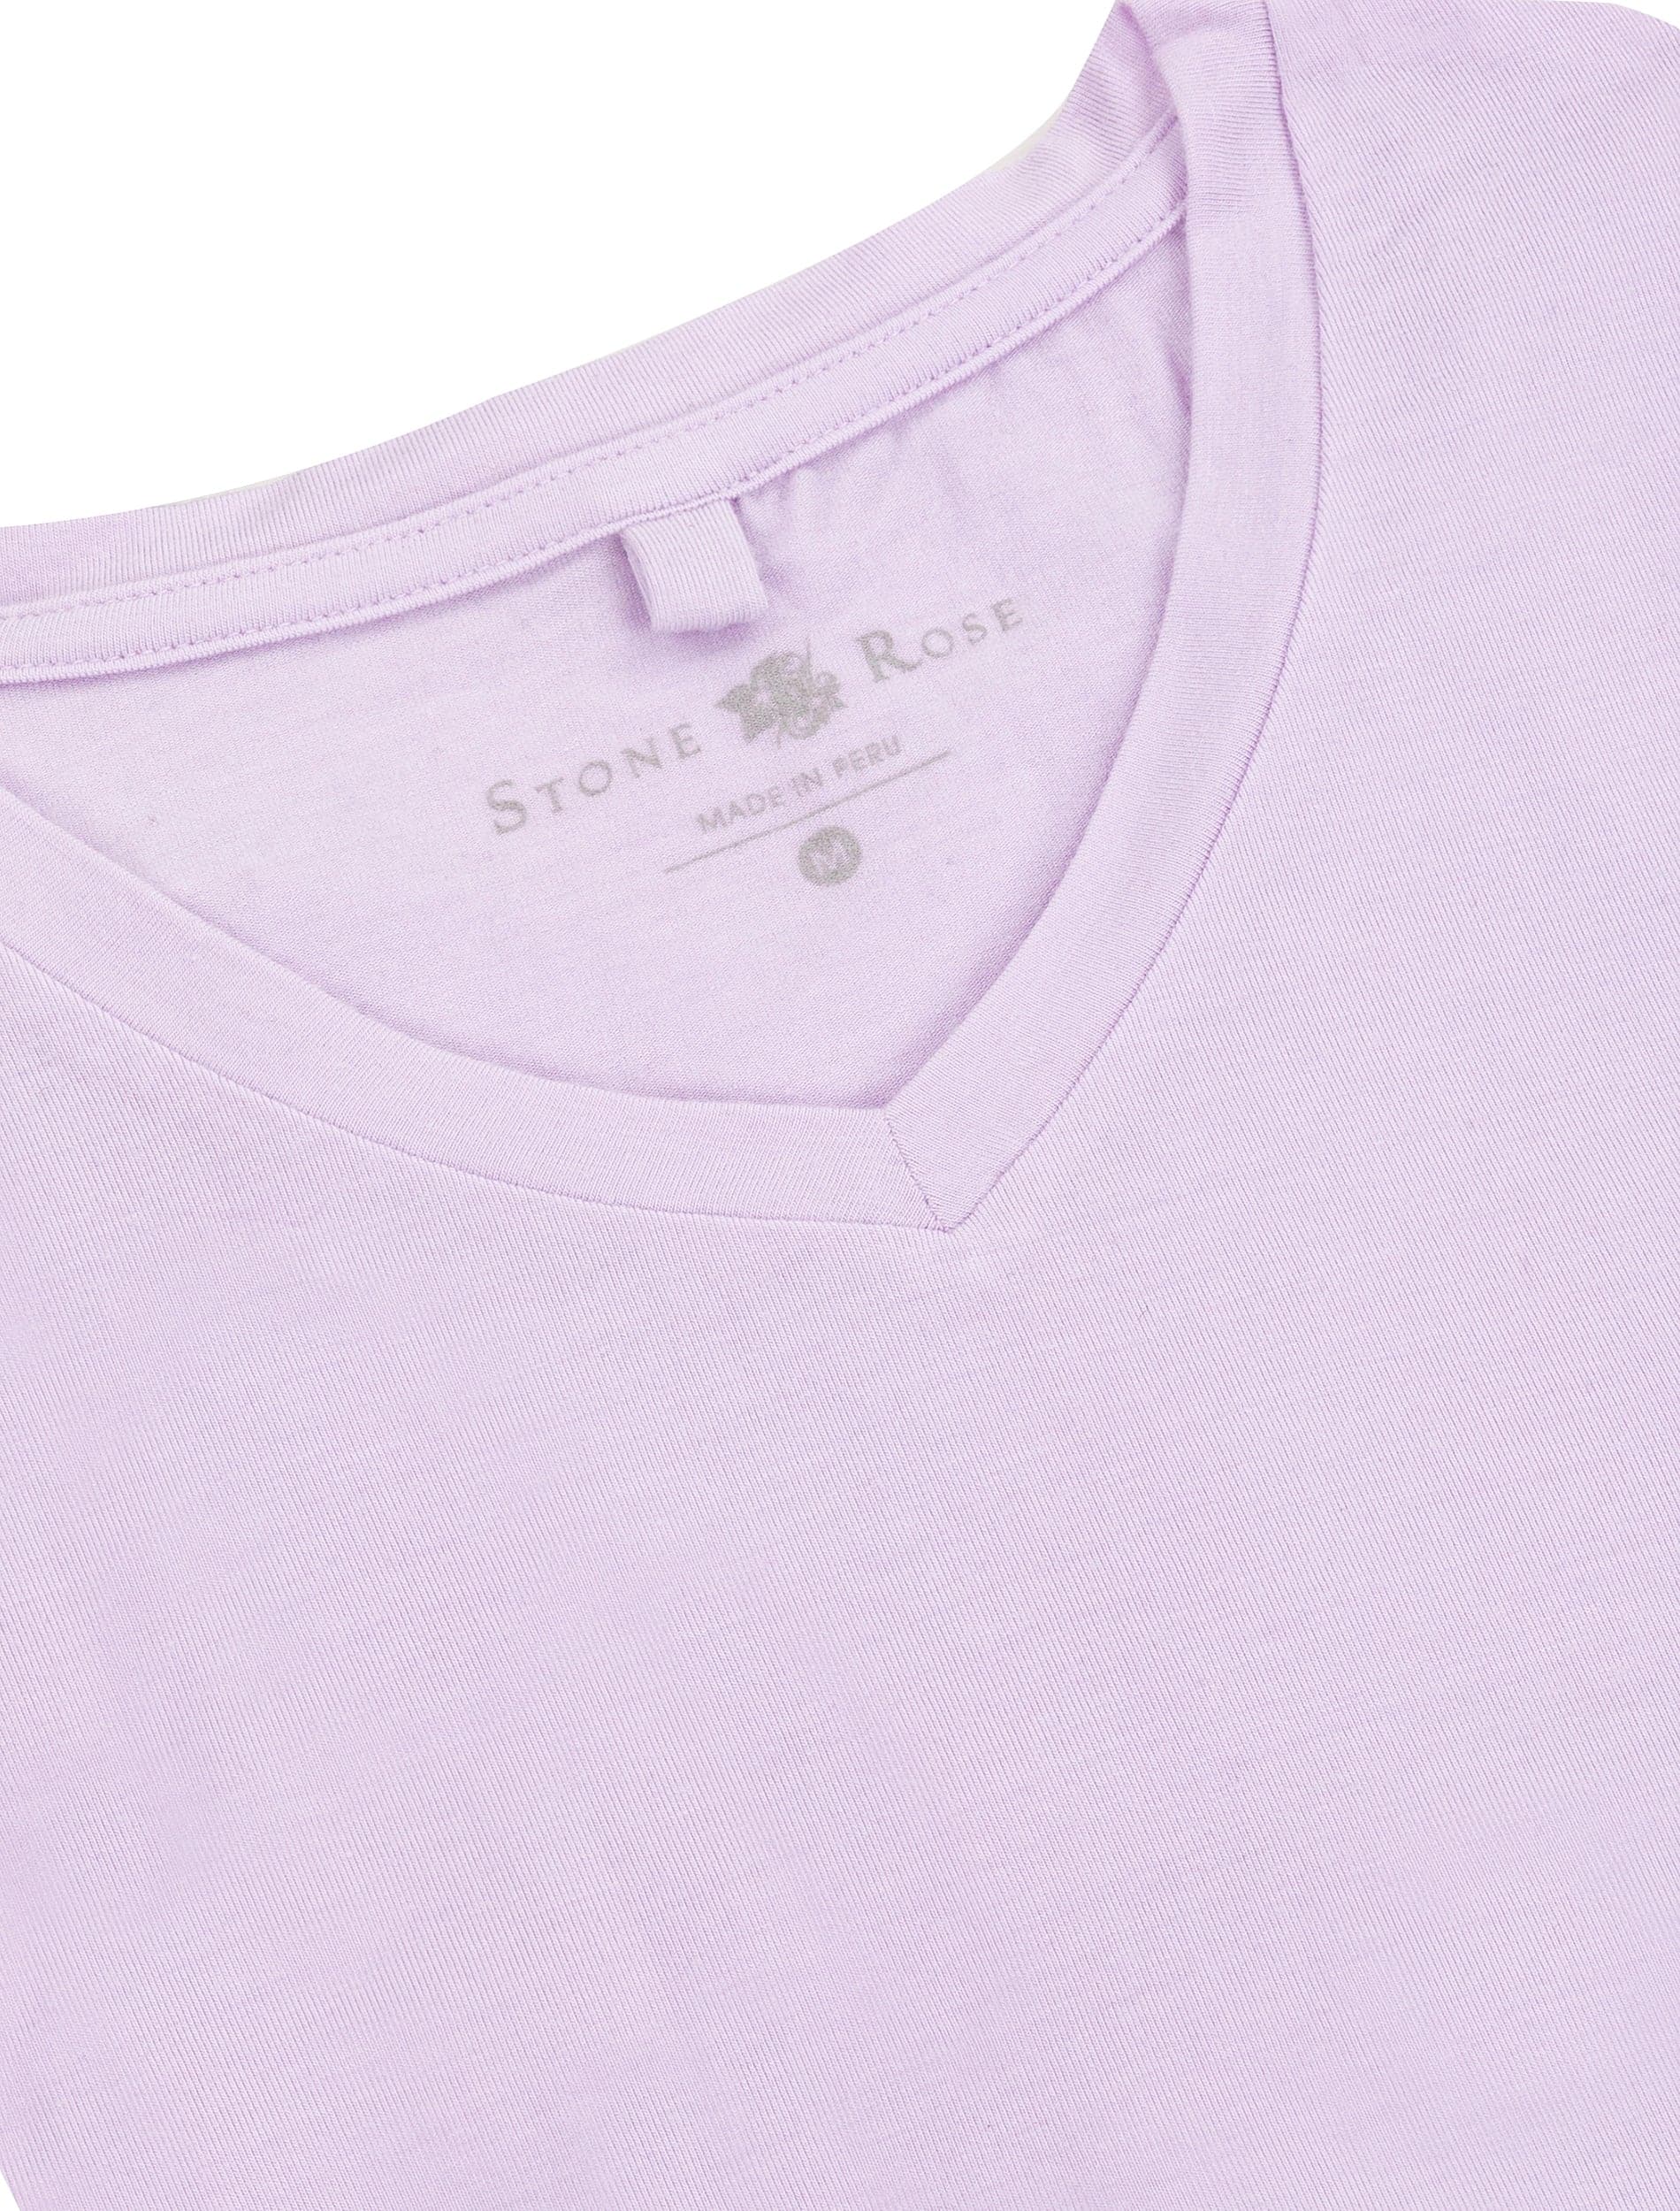 Lavender V-Neck Modal T-Shirt - Browse Men’s Spring Shirts | Stone Rose